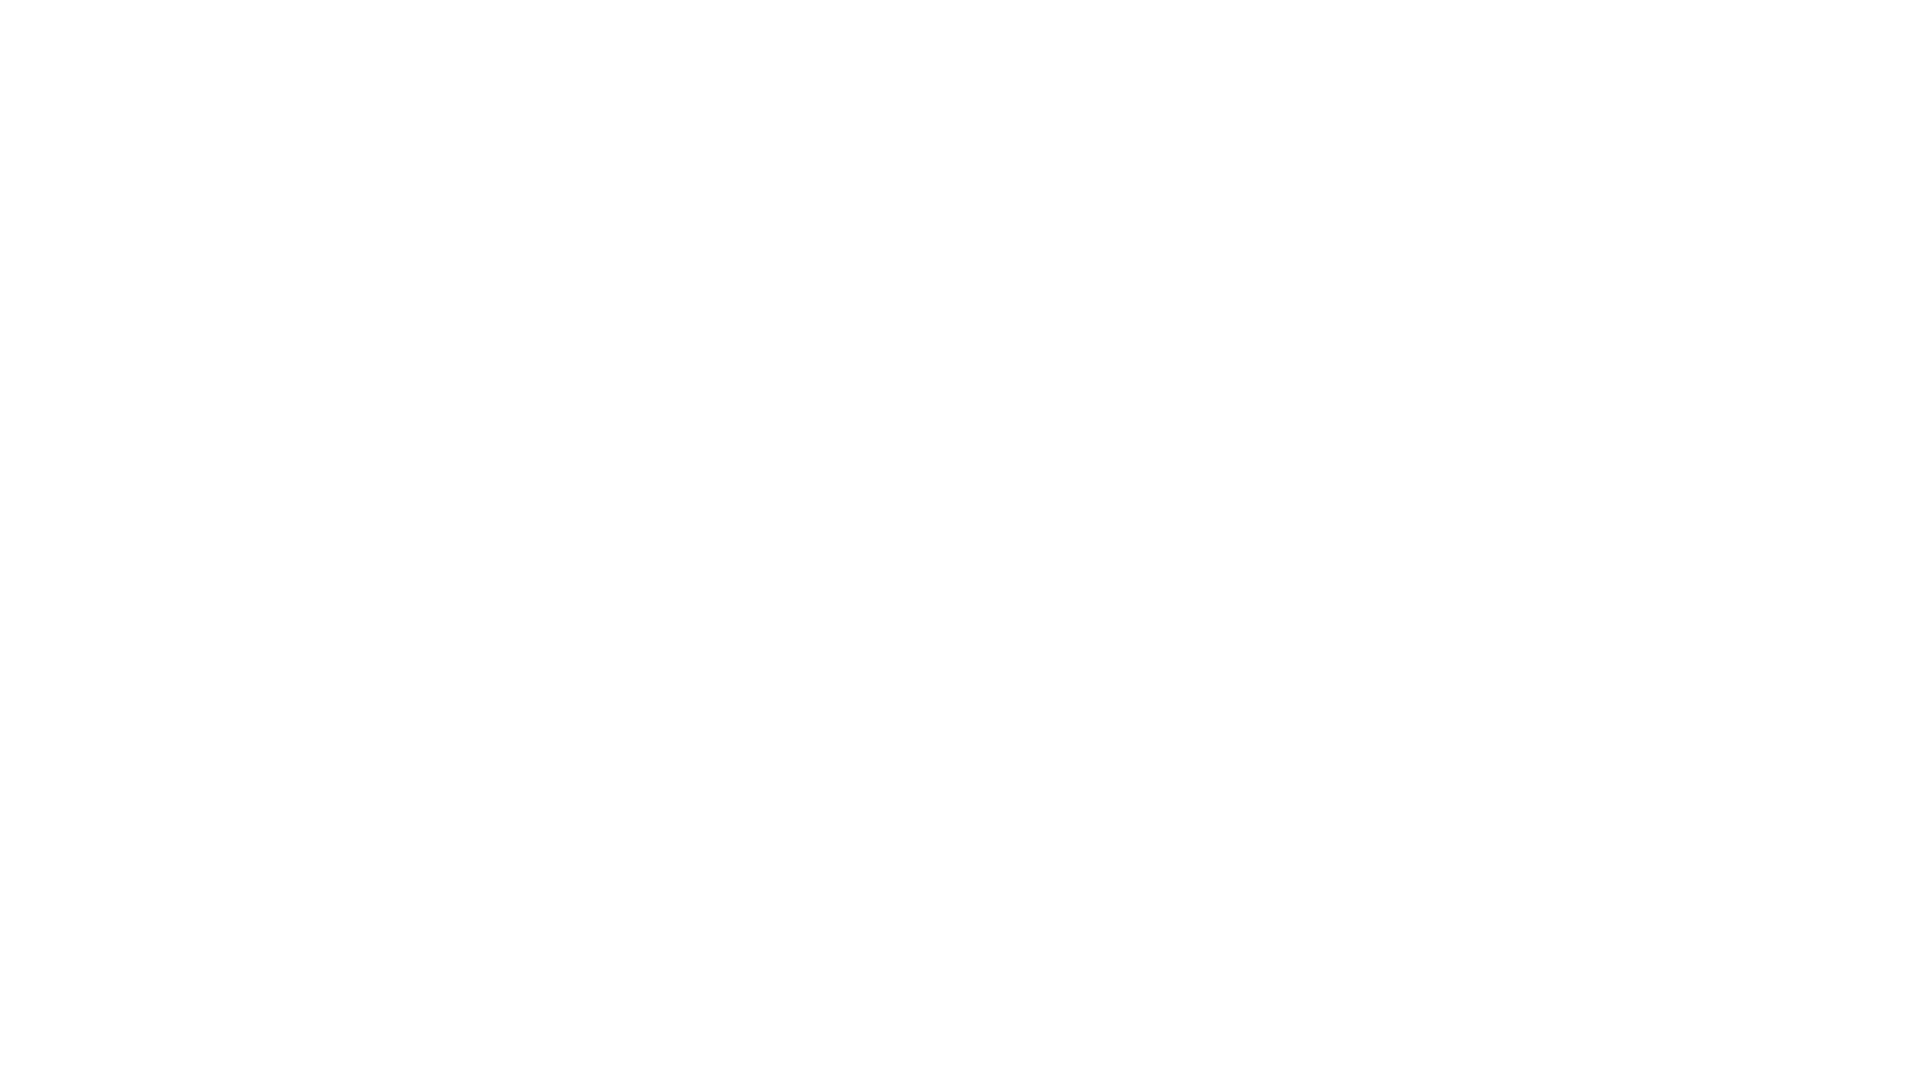 Dream medicine